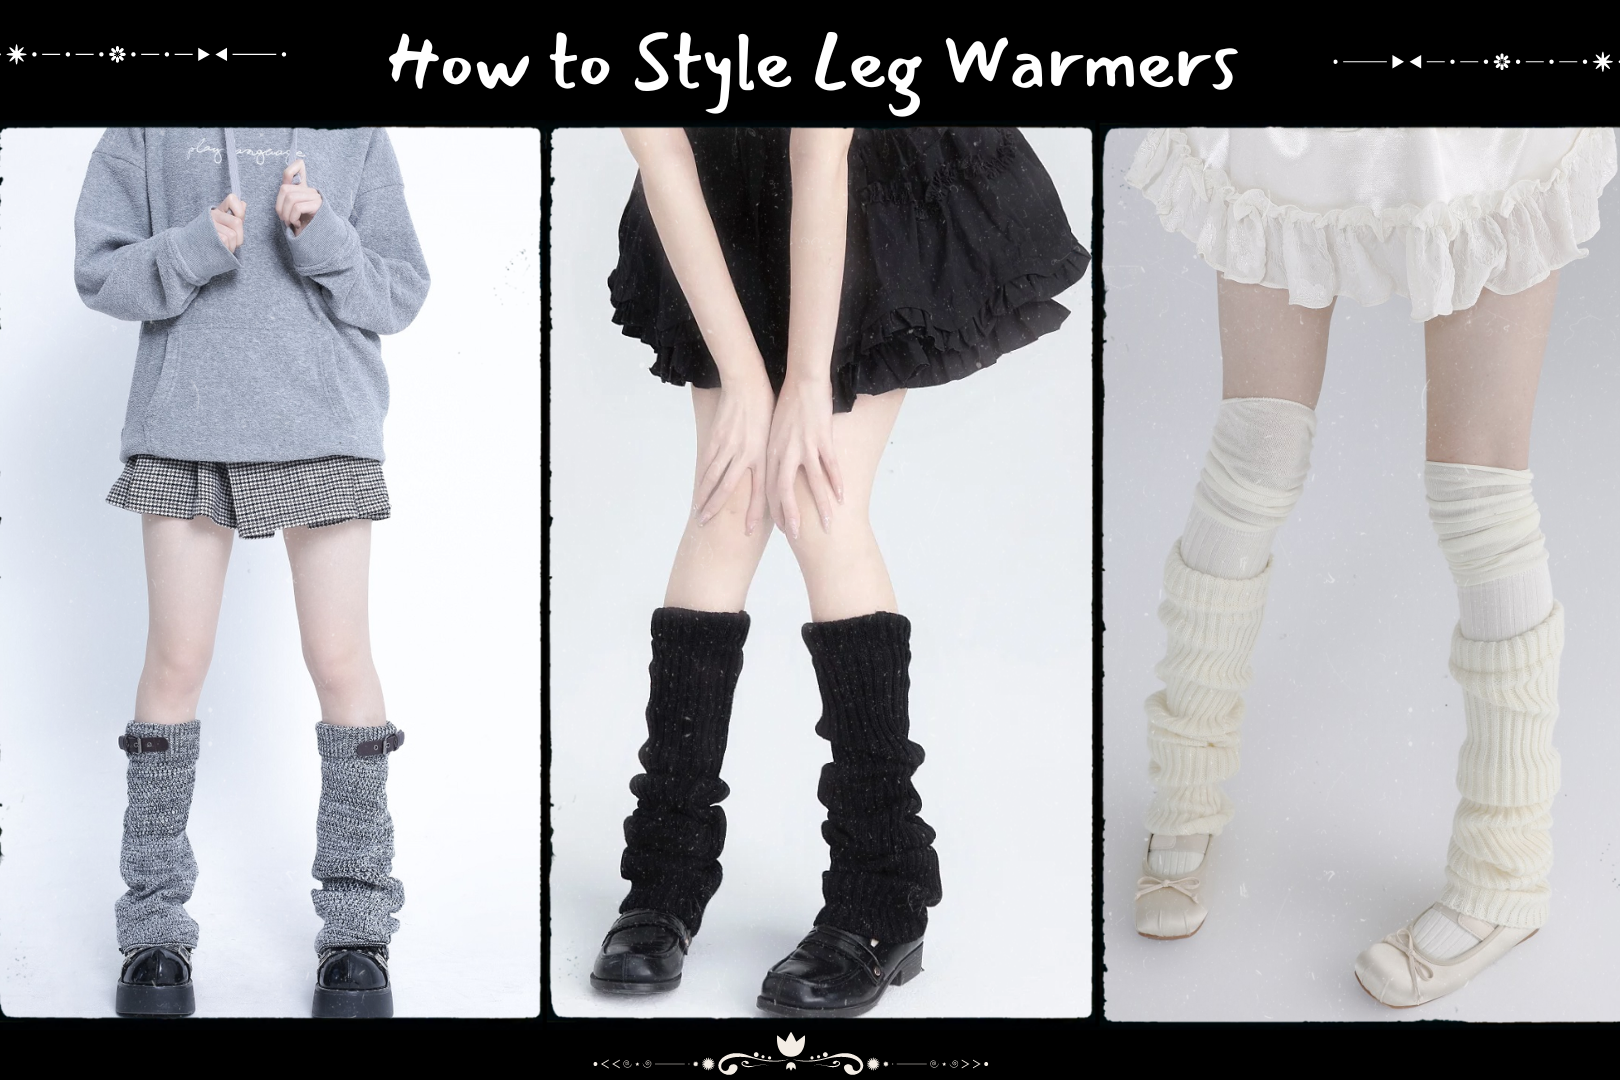 Plus Size Leg Warmers for Women- Pink White